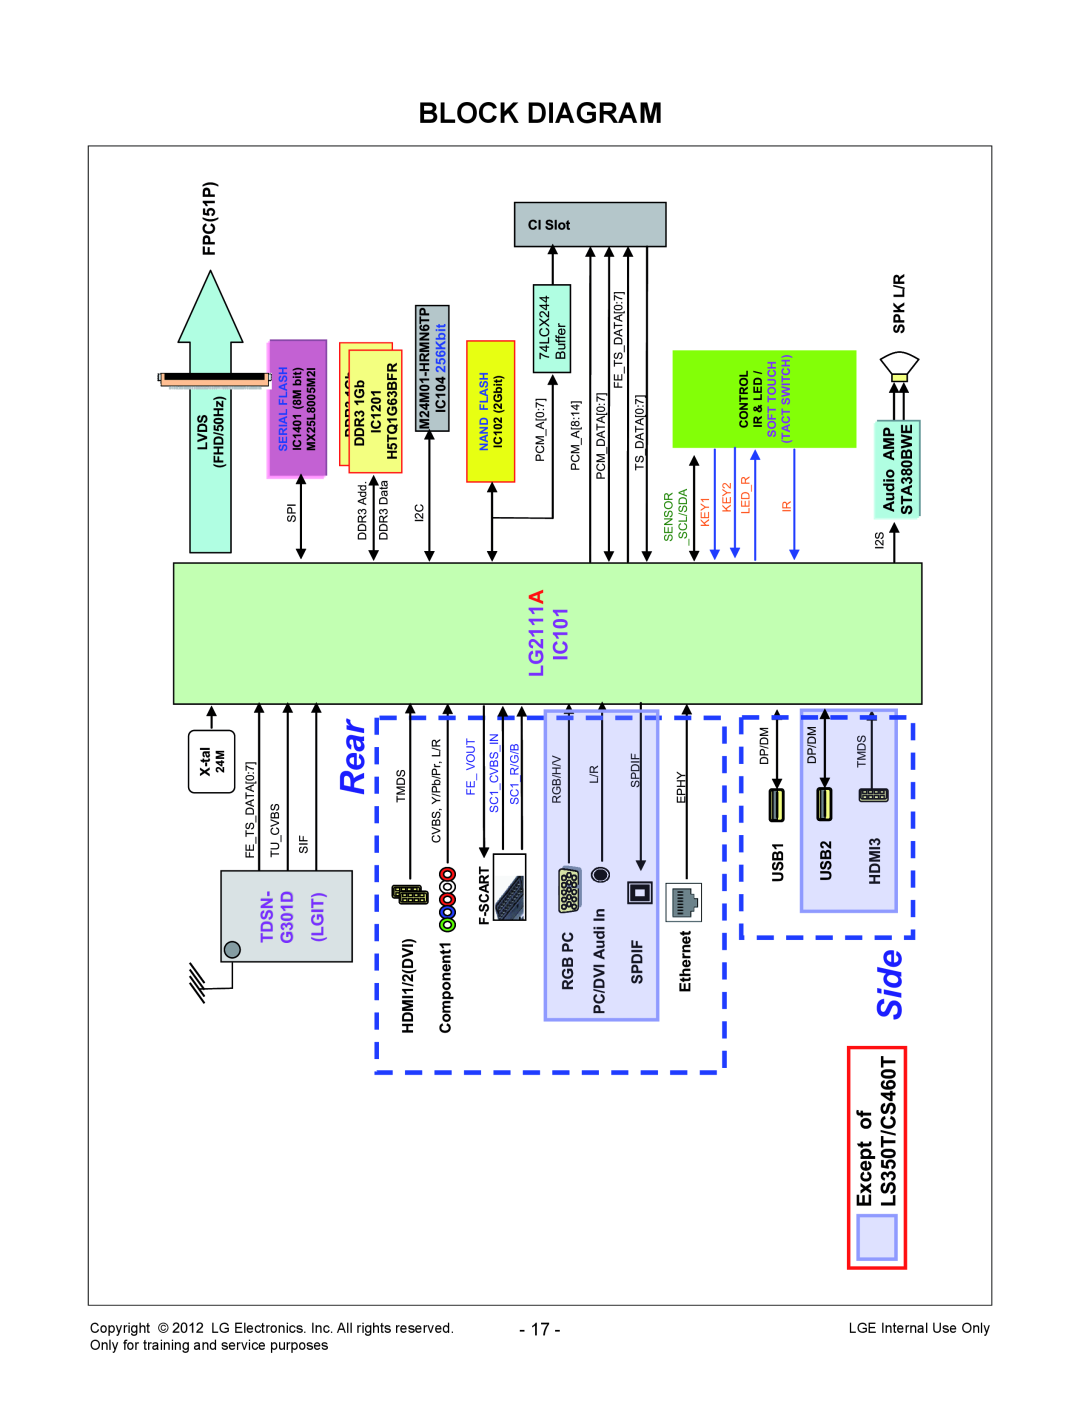 LG Electronics 32LS679C-ZC Block Diagram, Rear, Side, LG2111 A, IC101, Except of, LS350T/CS460T, Tdsn, G301D, Lgit 